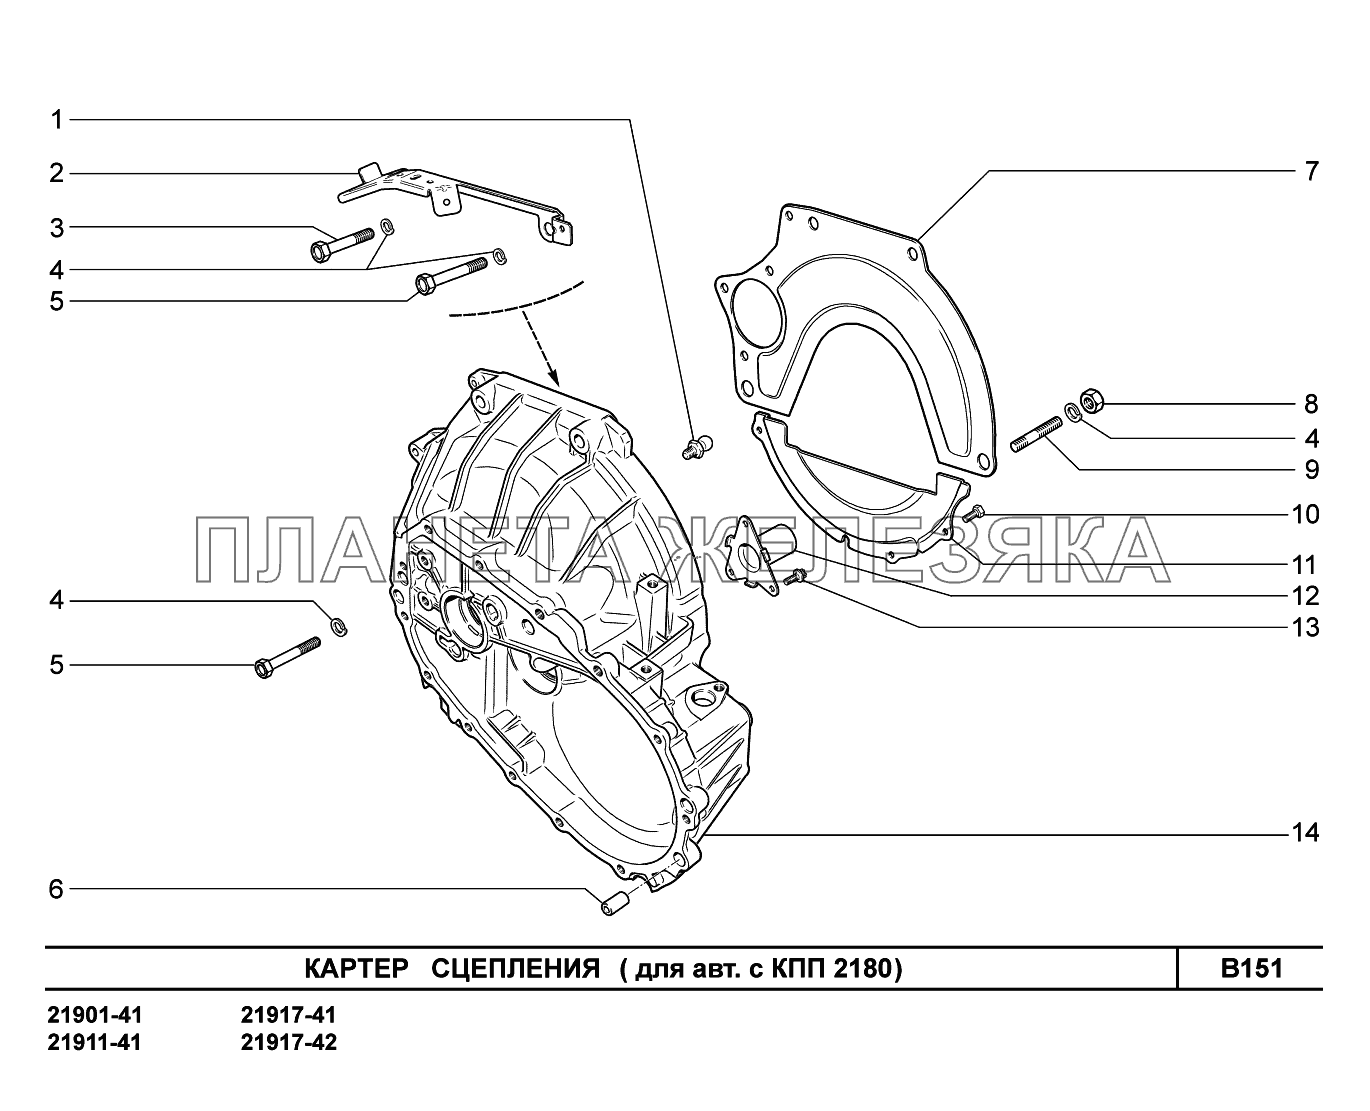 B151. Картер сцепления Lada Granta-2190